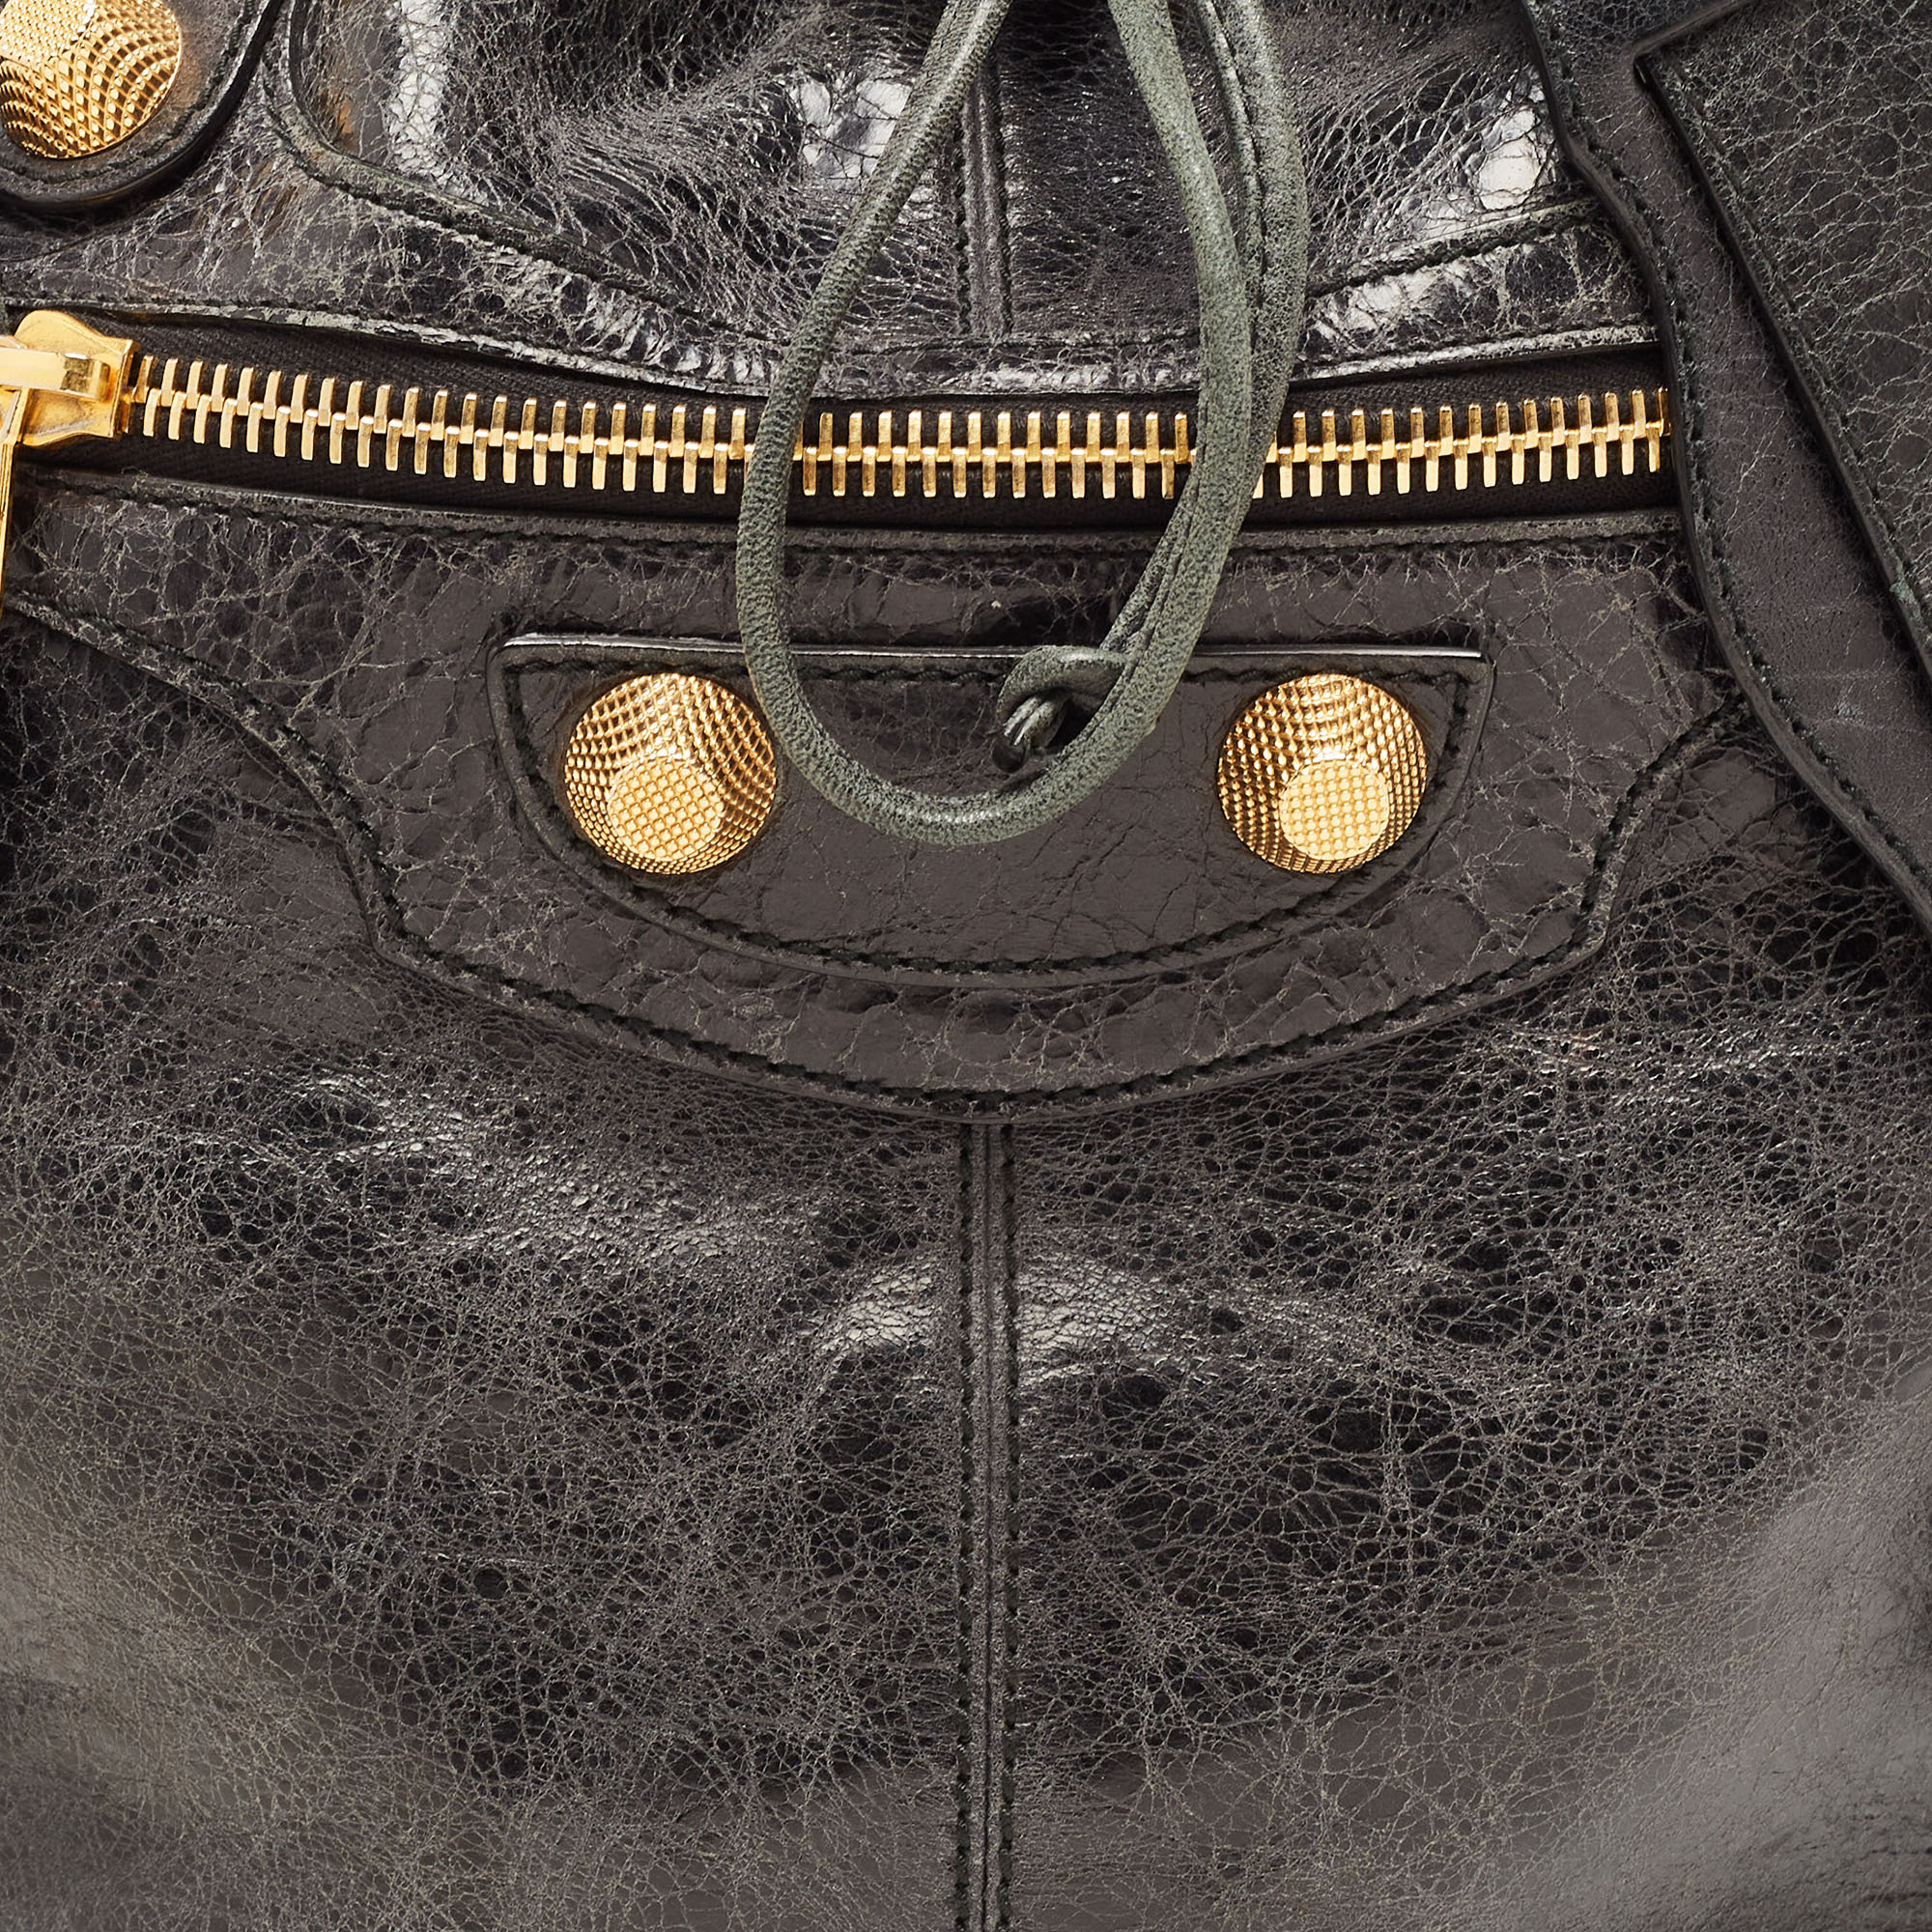 Balenciaga Black Leather GGH PomPon Bag